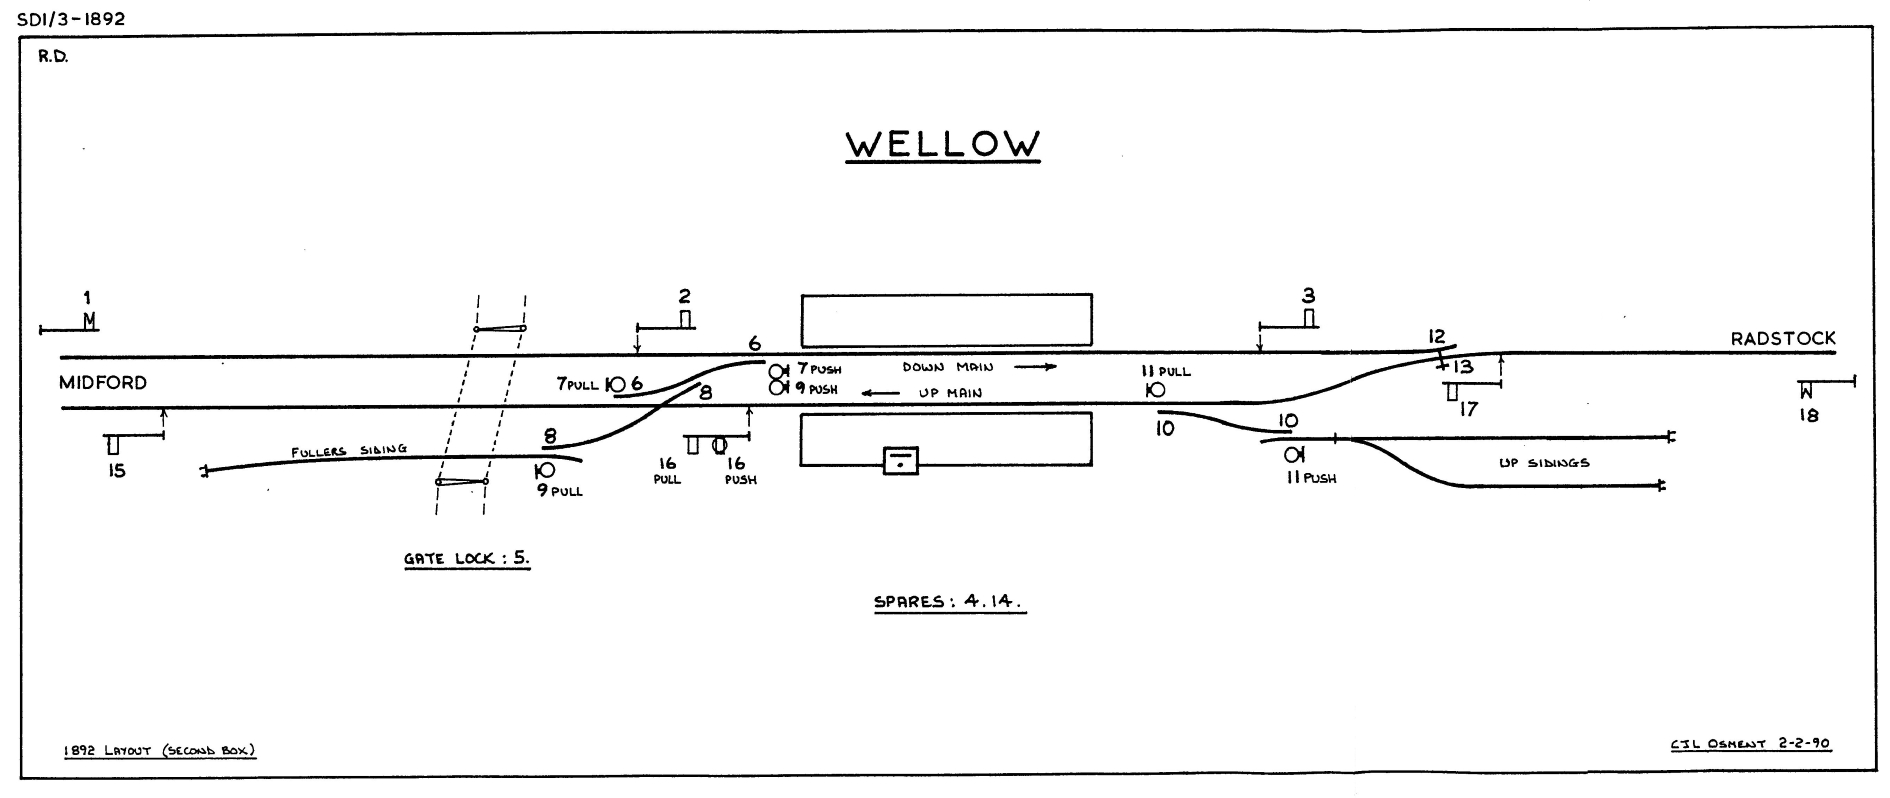 Wellow signal-box diagram 1892